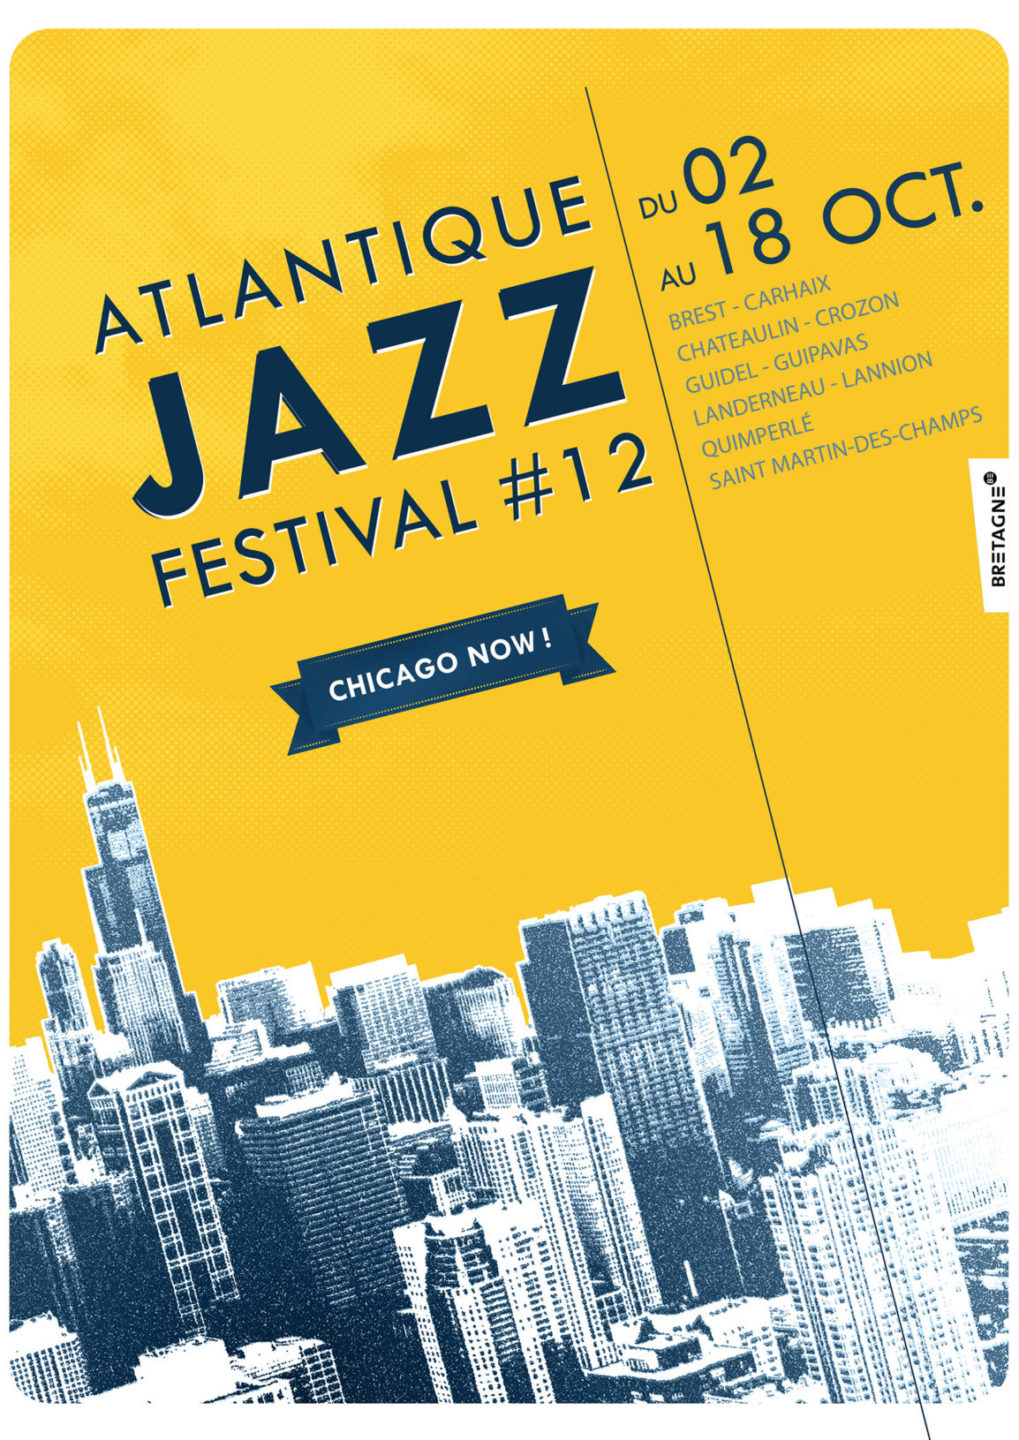 Atlantique jazz festival 2015